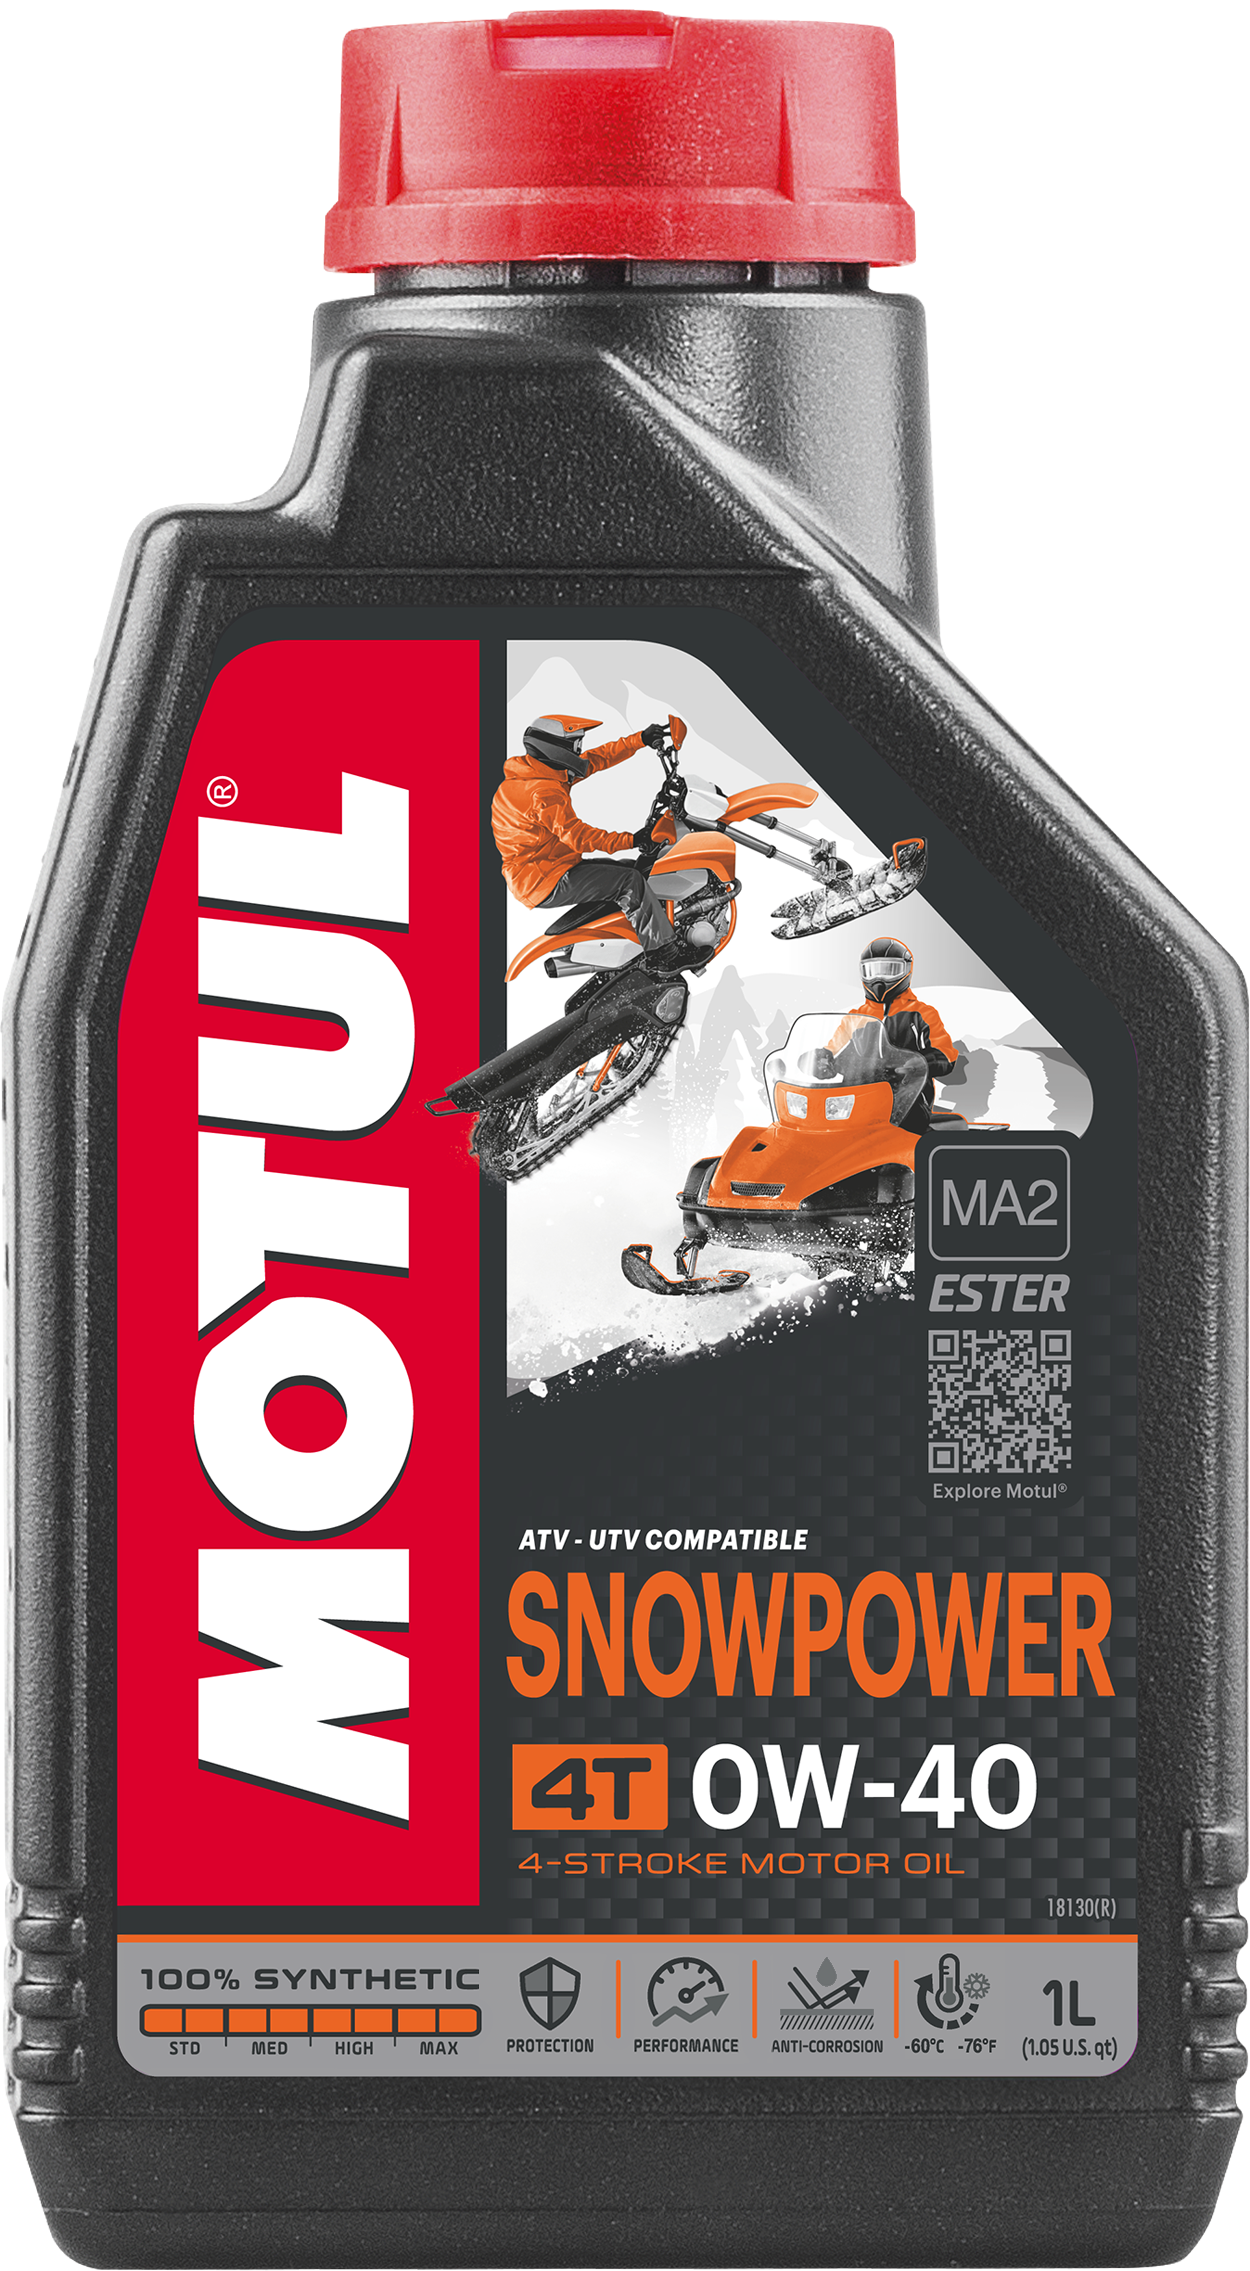 Motul Snowpower 4T 0W-40, 1 liter